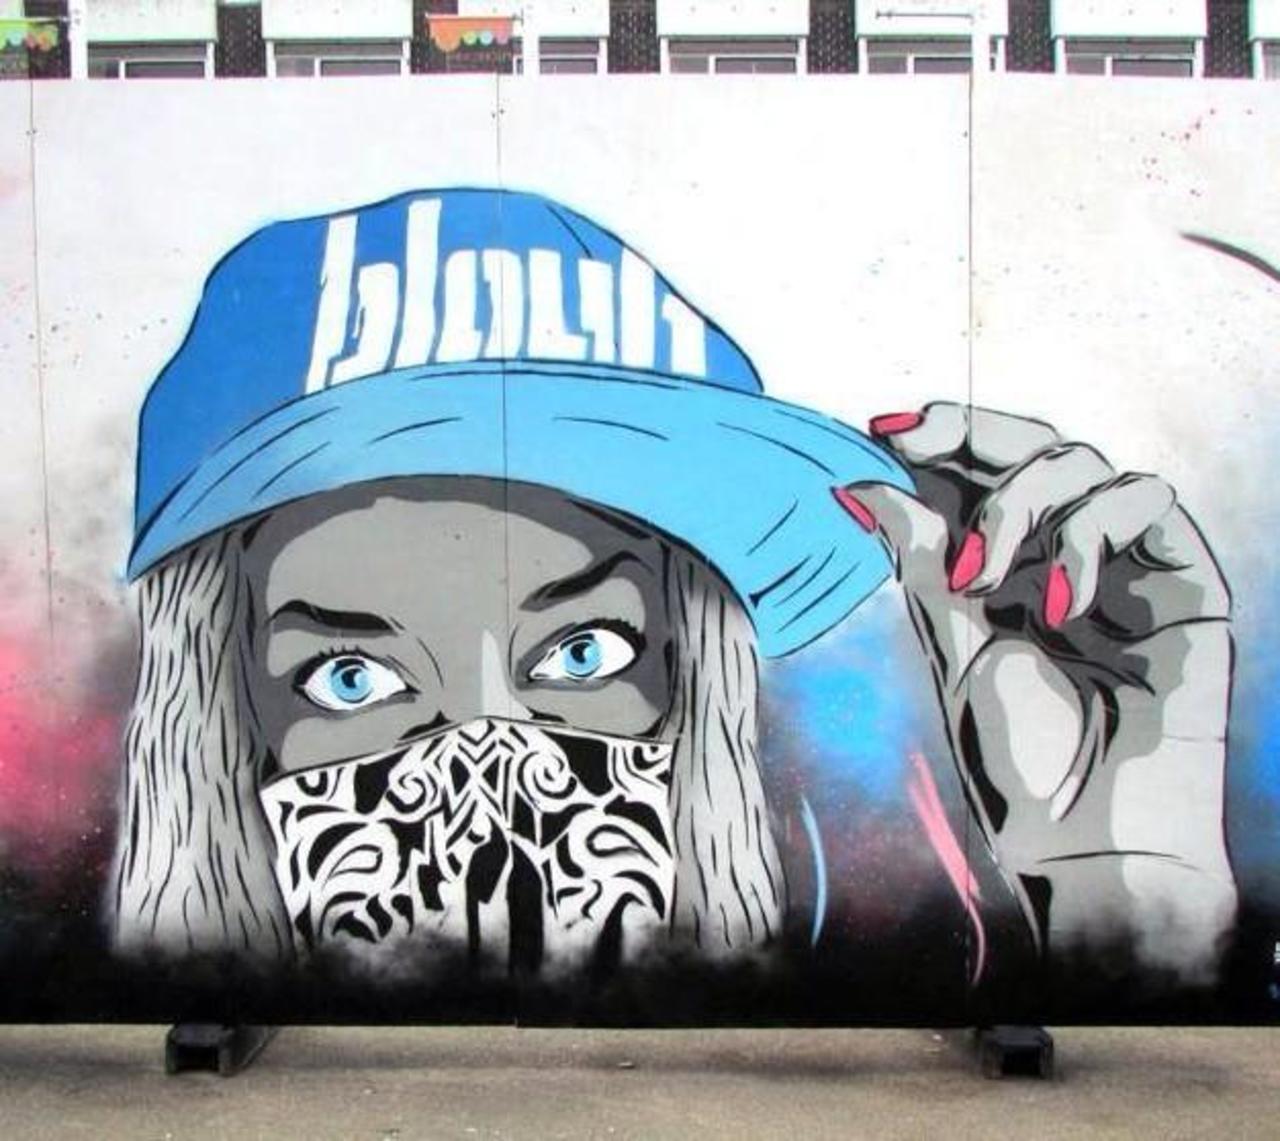 Artist Blouh at the Glouchester Paint Jamb, London, UK #art #mural #graffiti #streetart https://t.co/WJErqoaAIm